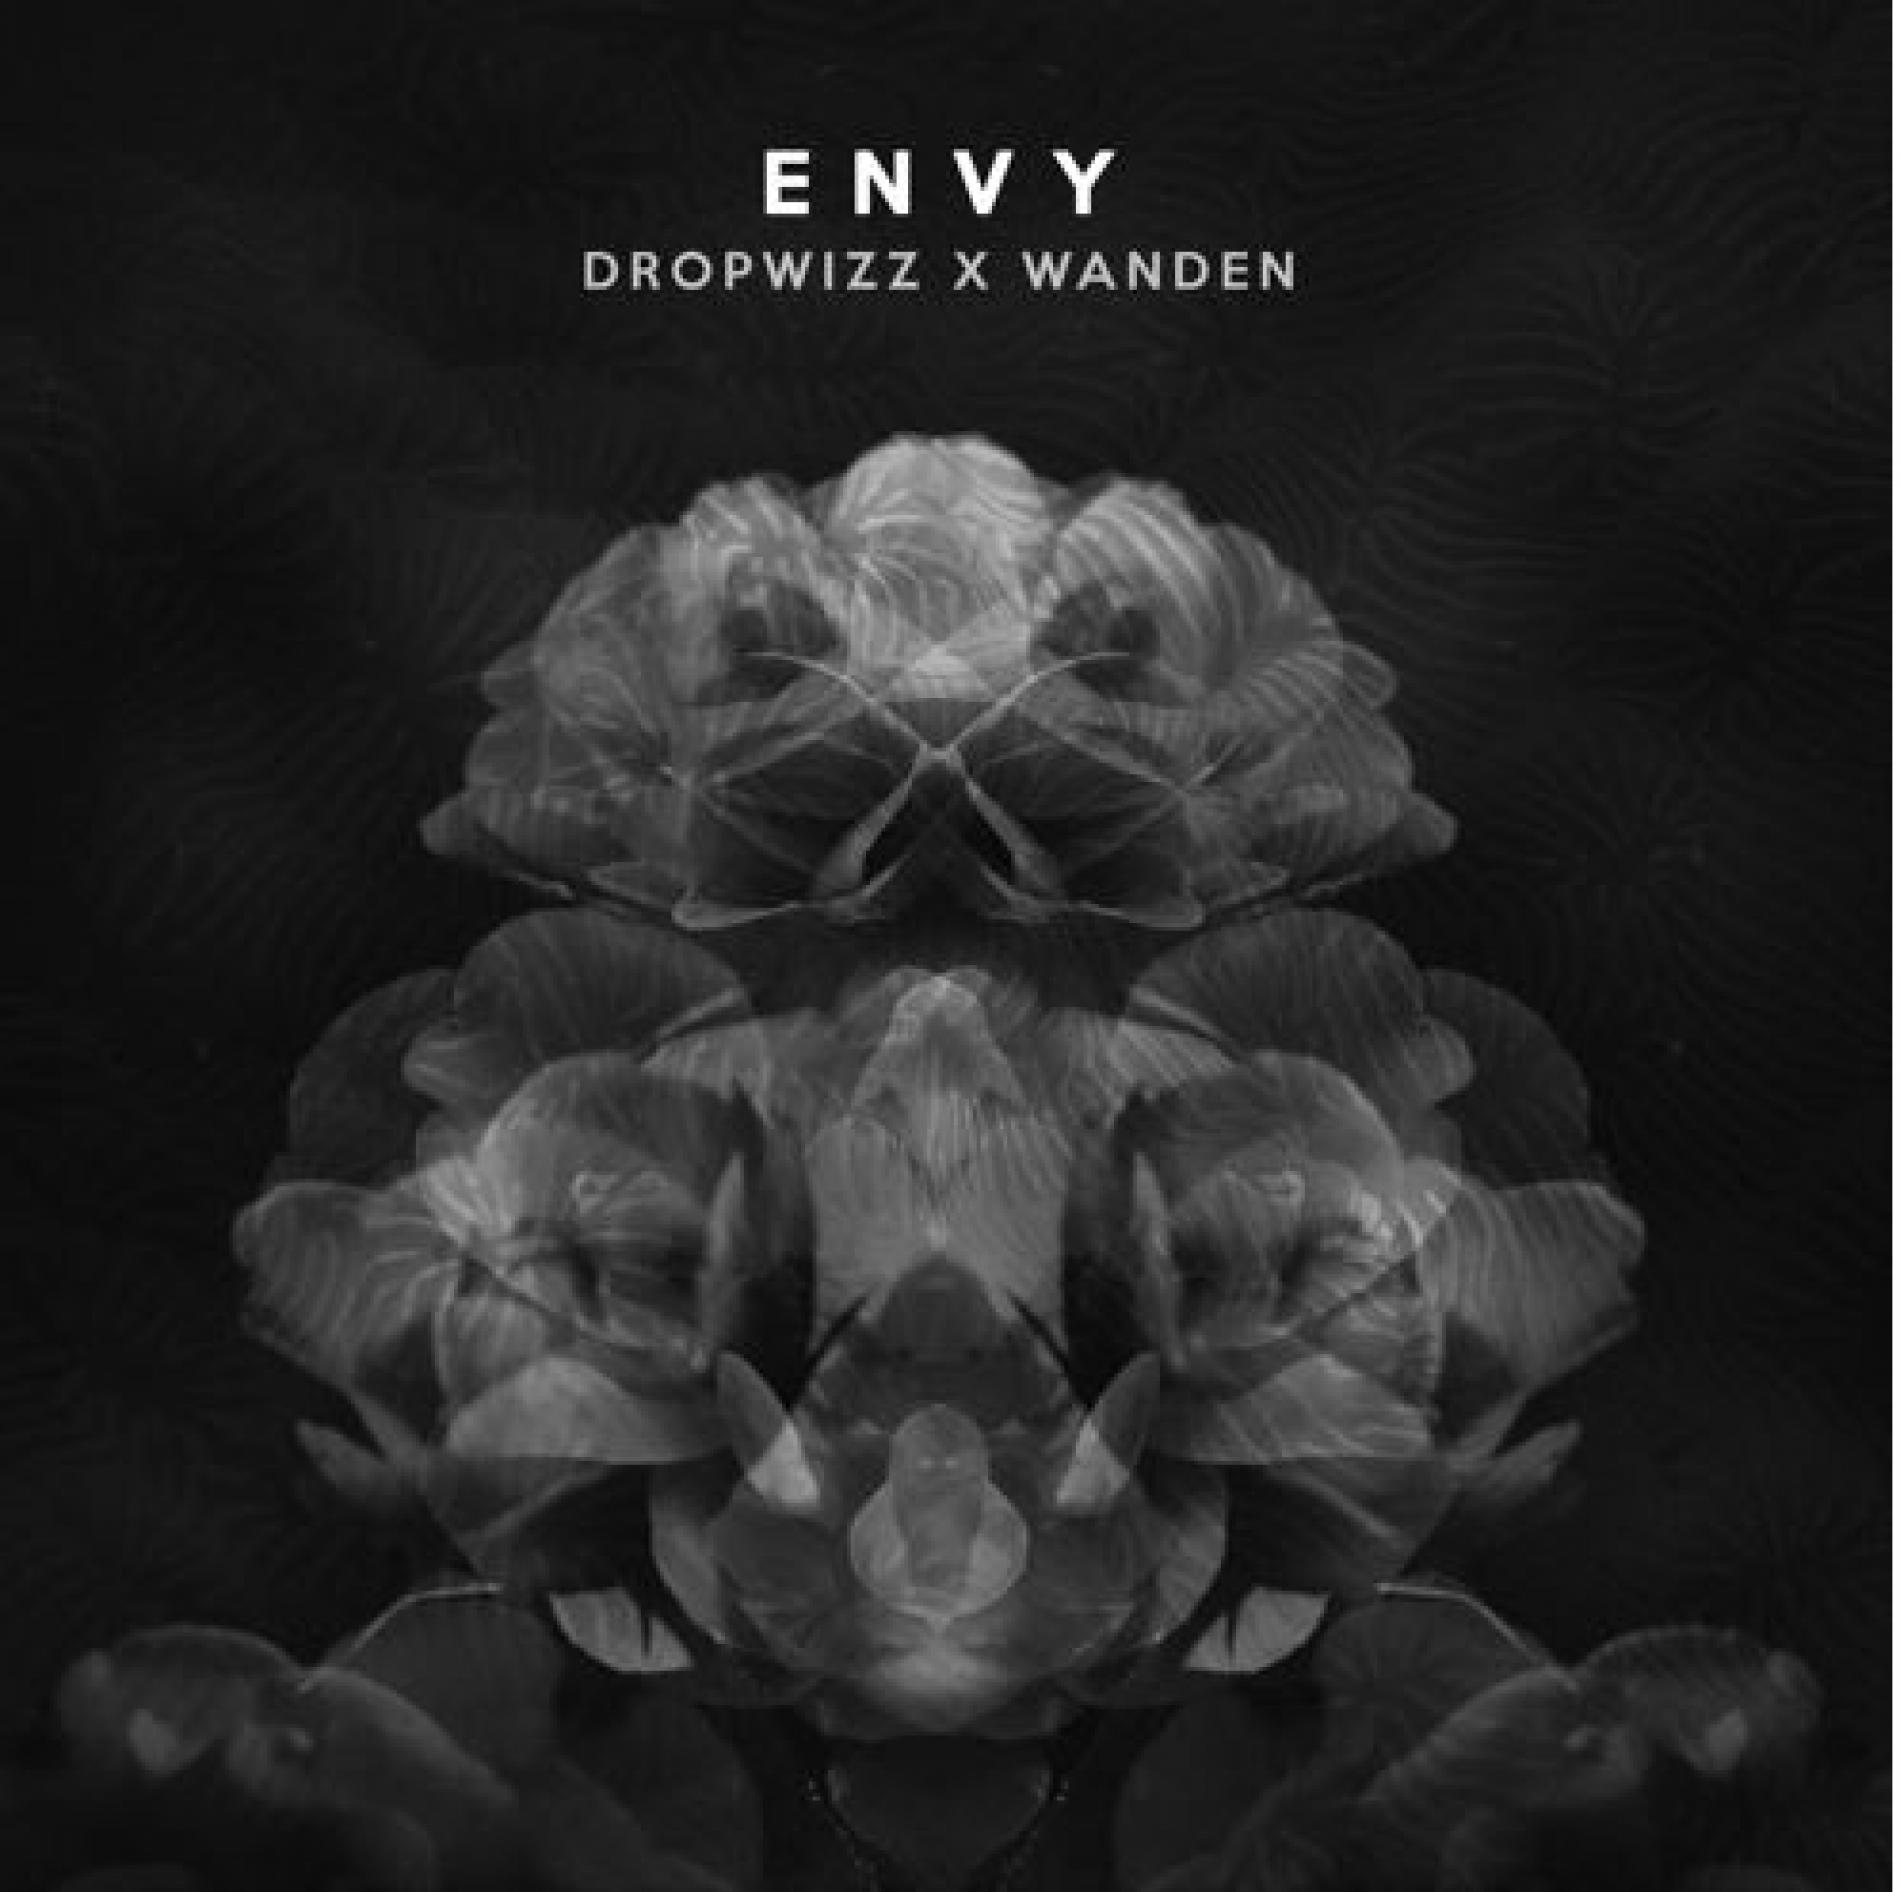 Dropwizz x Wanden – Envy